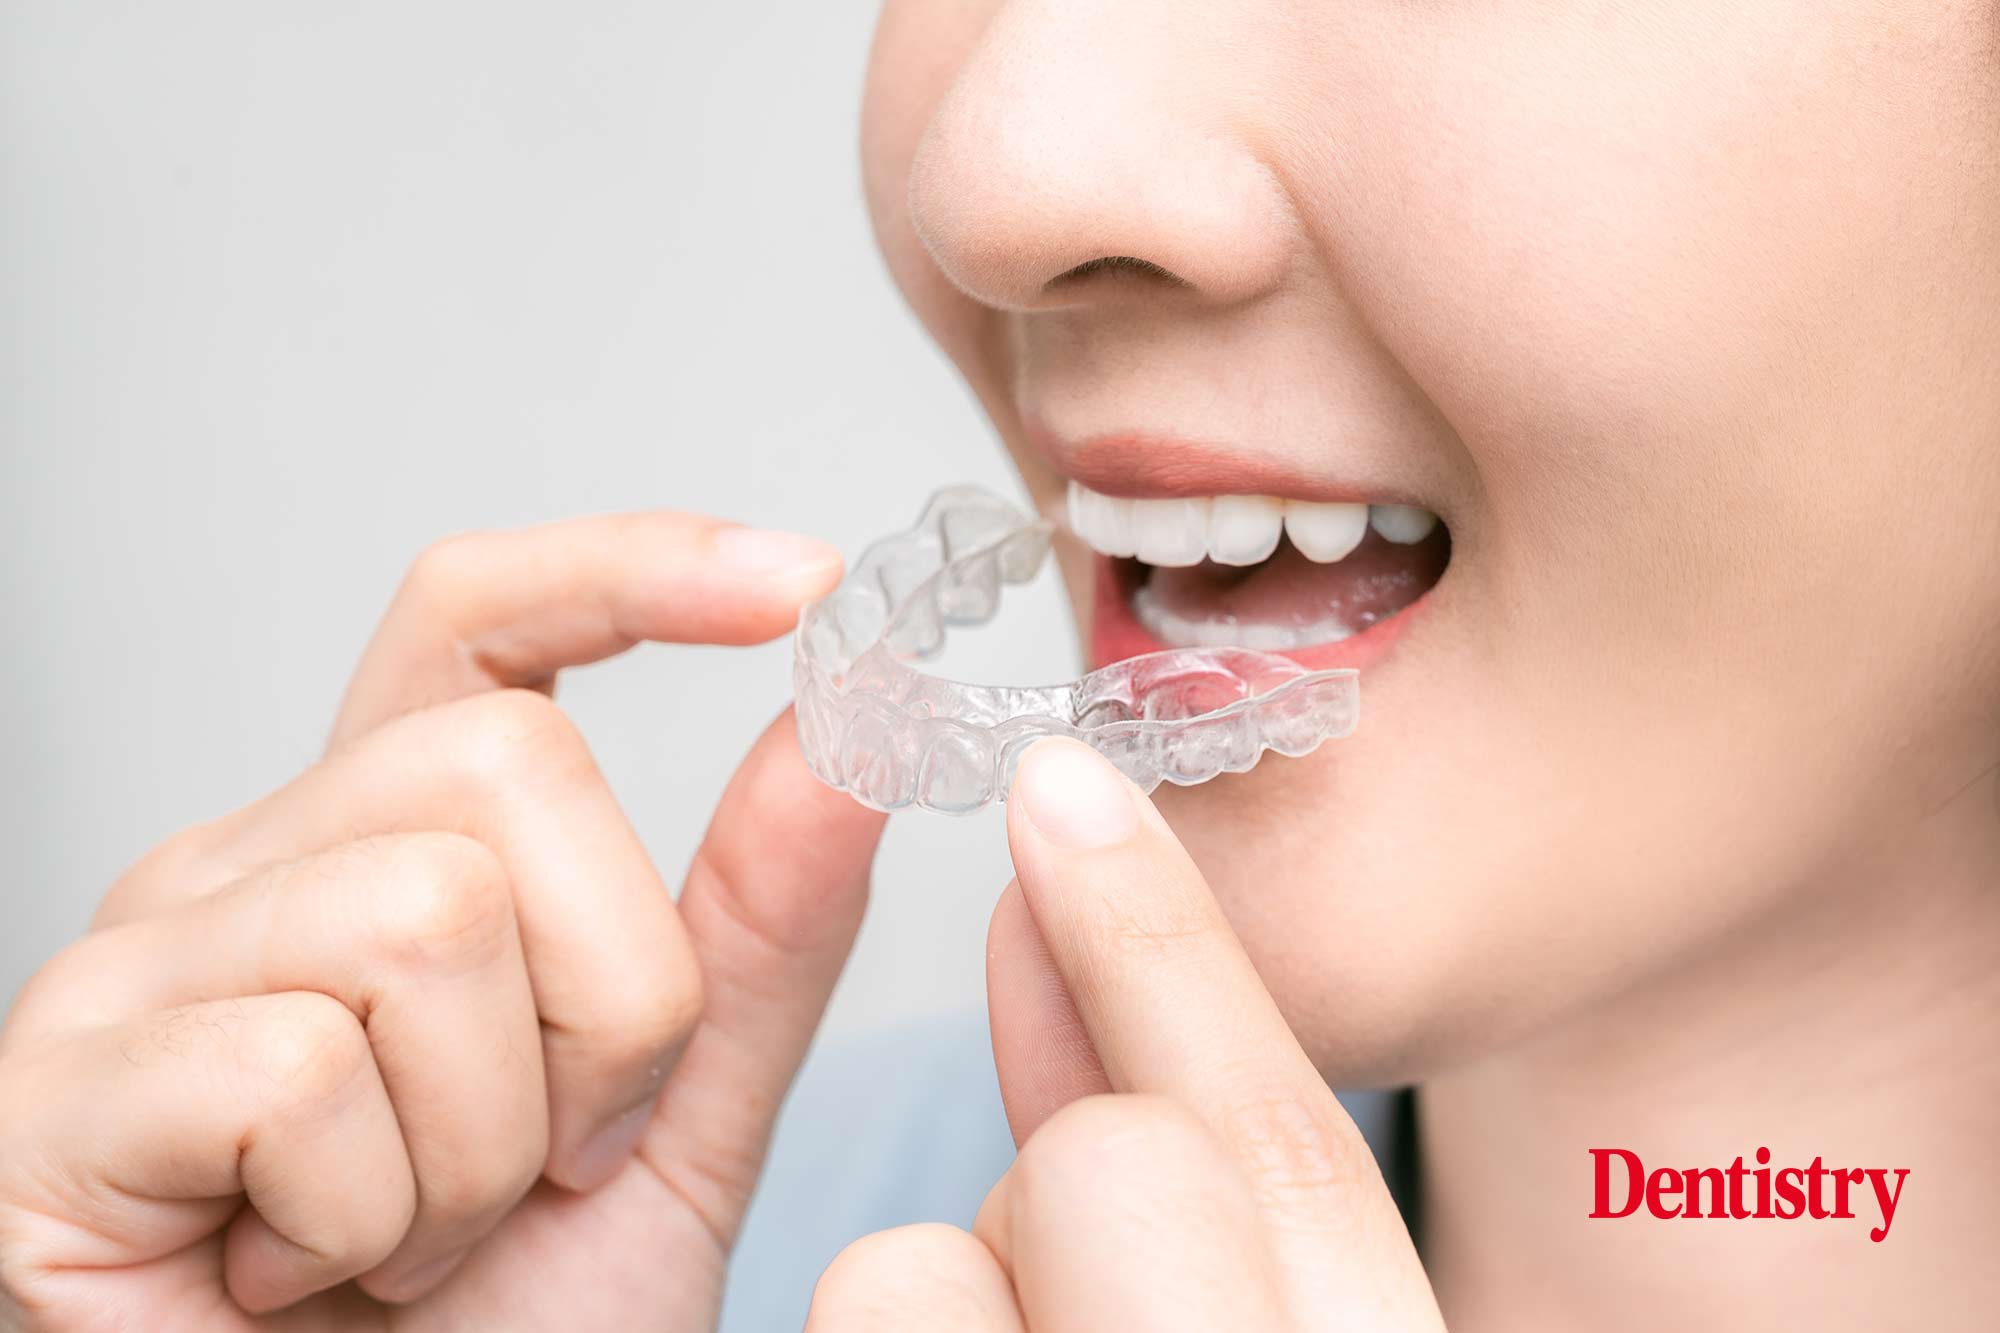 DIY orthodontics is potentially dangerous, BOS reiterates